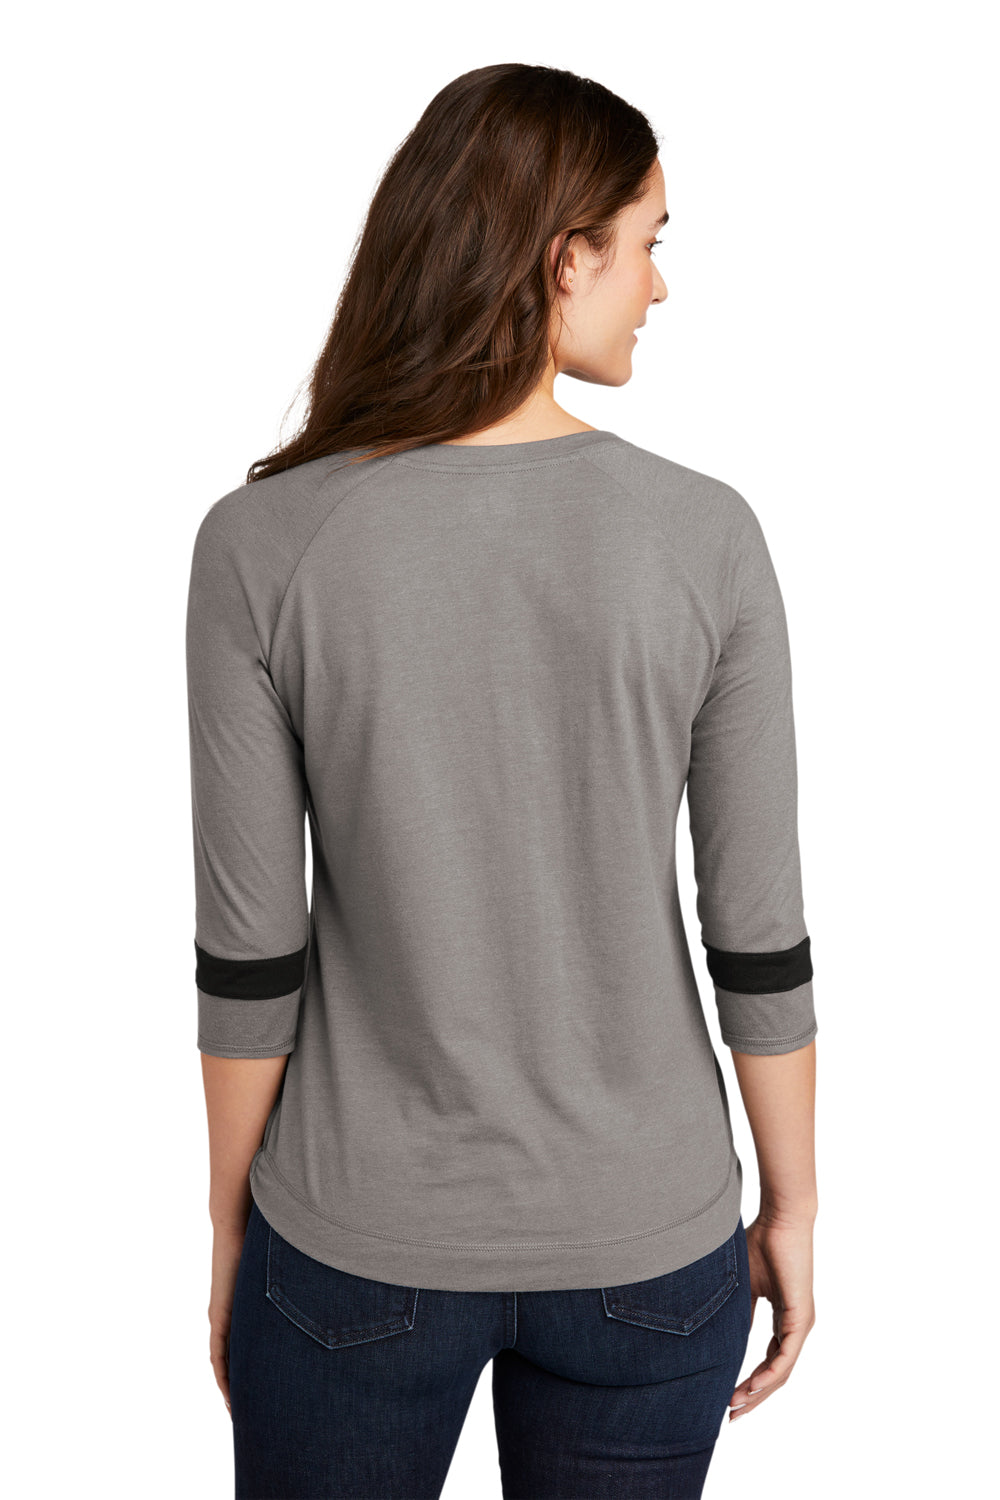 New Era Womens 3/4 Sleeve Crewneck T-Shirt Shadow Grey/Black Side